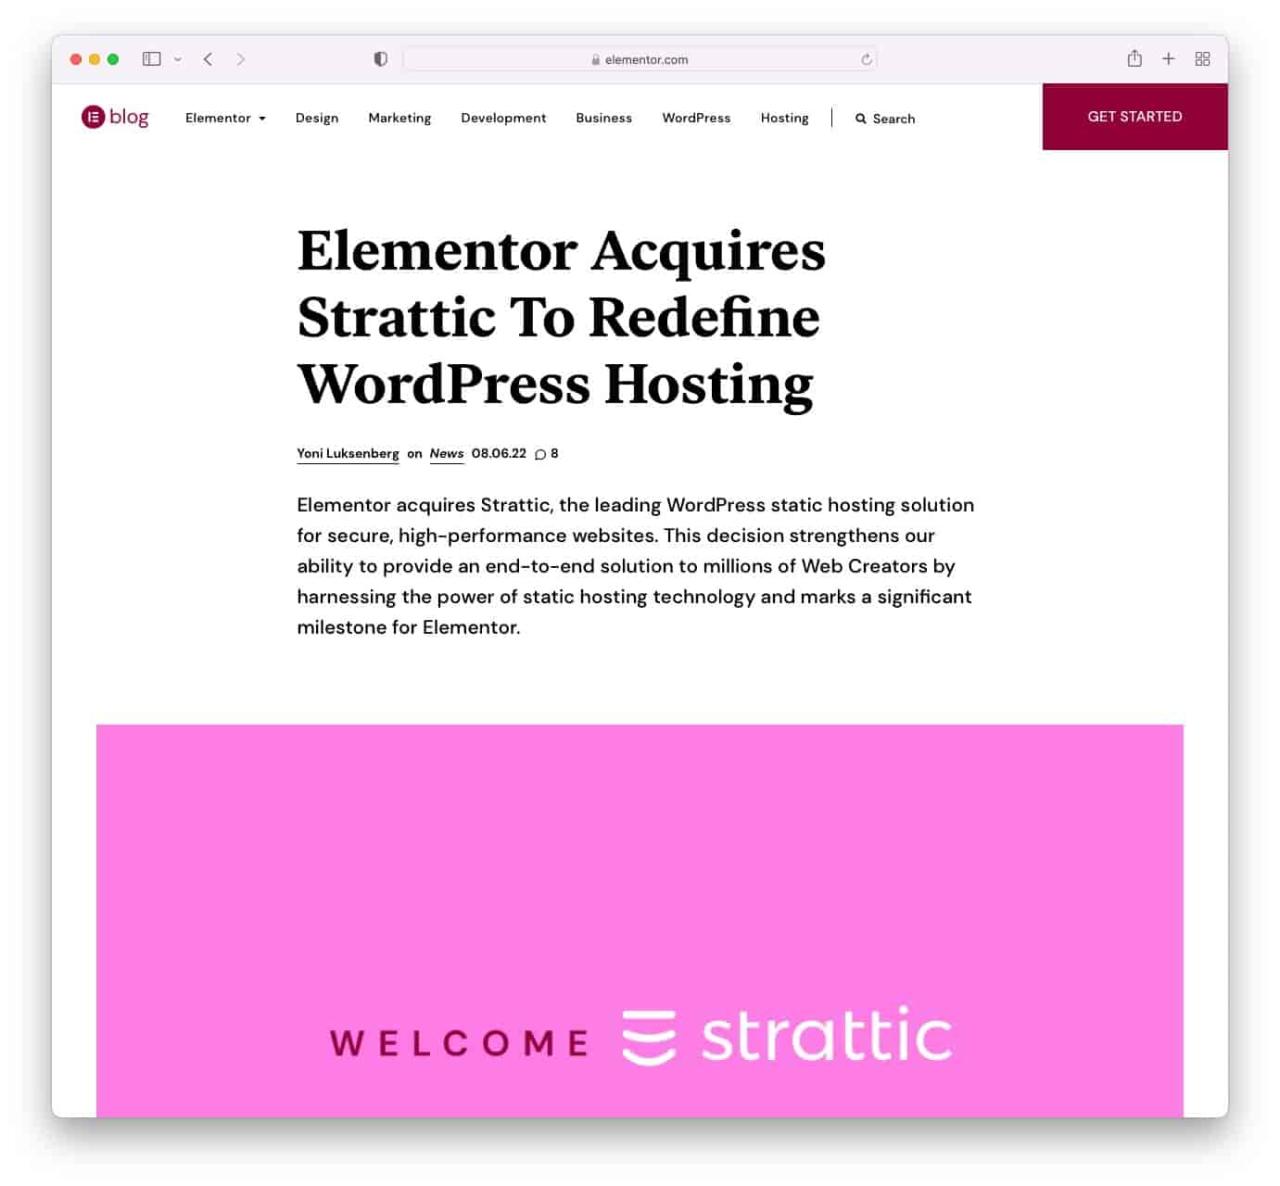 Elementor 收購靜態 WordPress 託管服務 Strattic